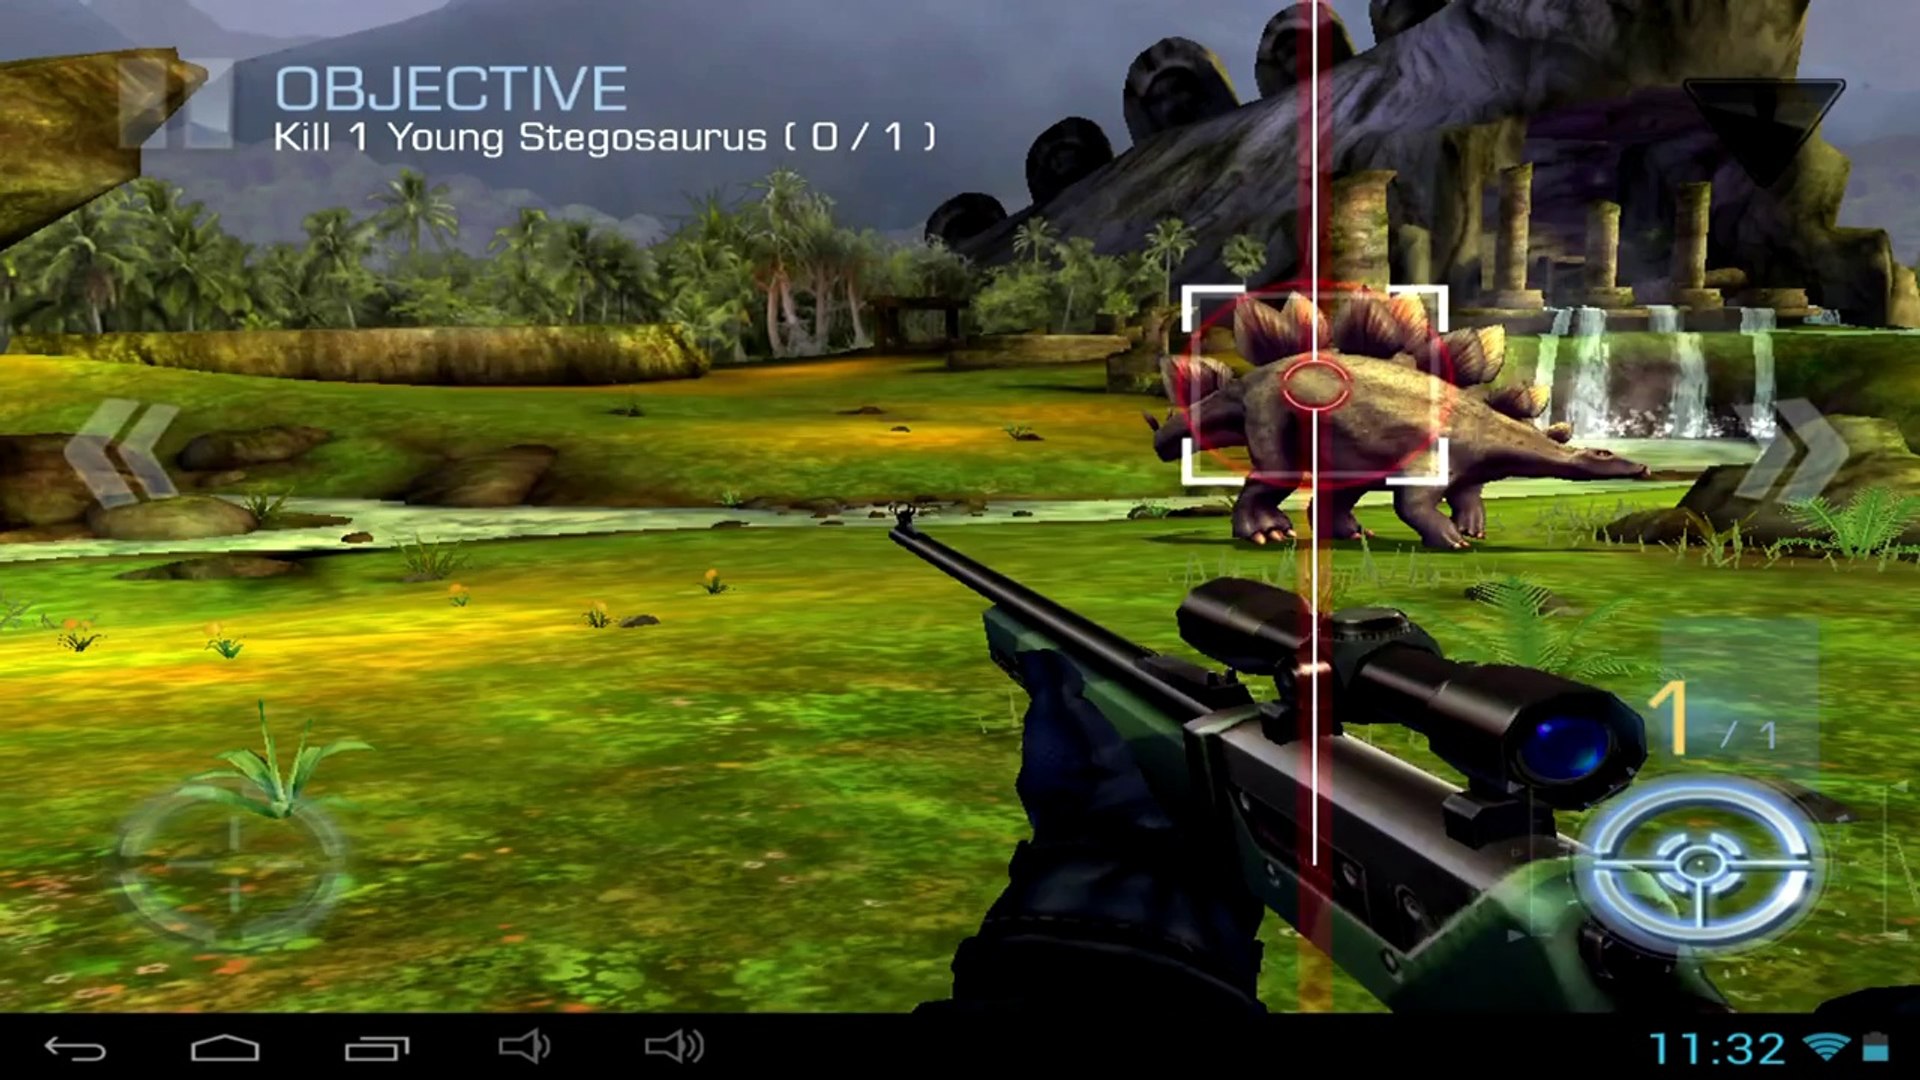 Play Dino Hunter Deadly Shores on PC 